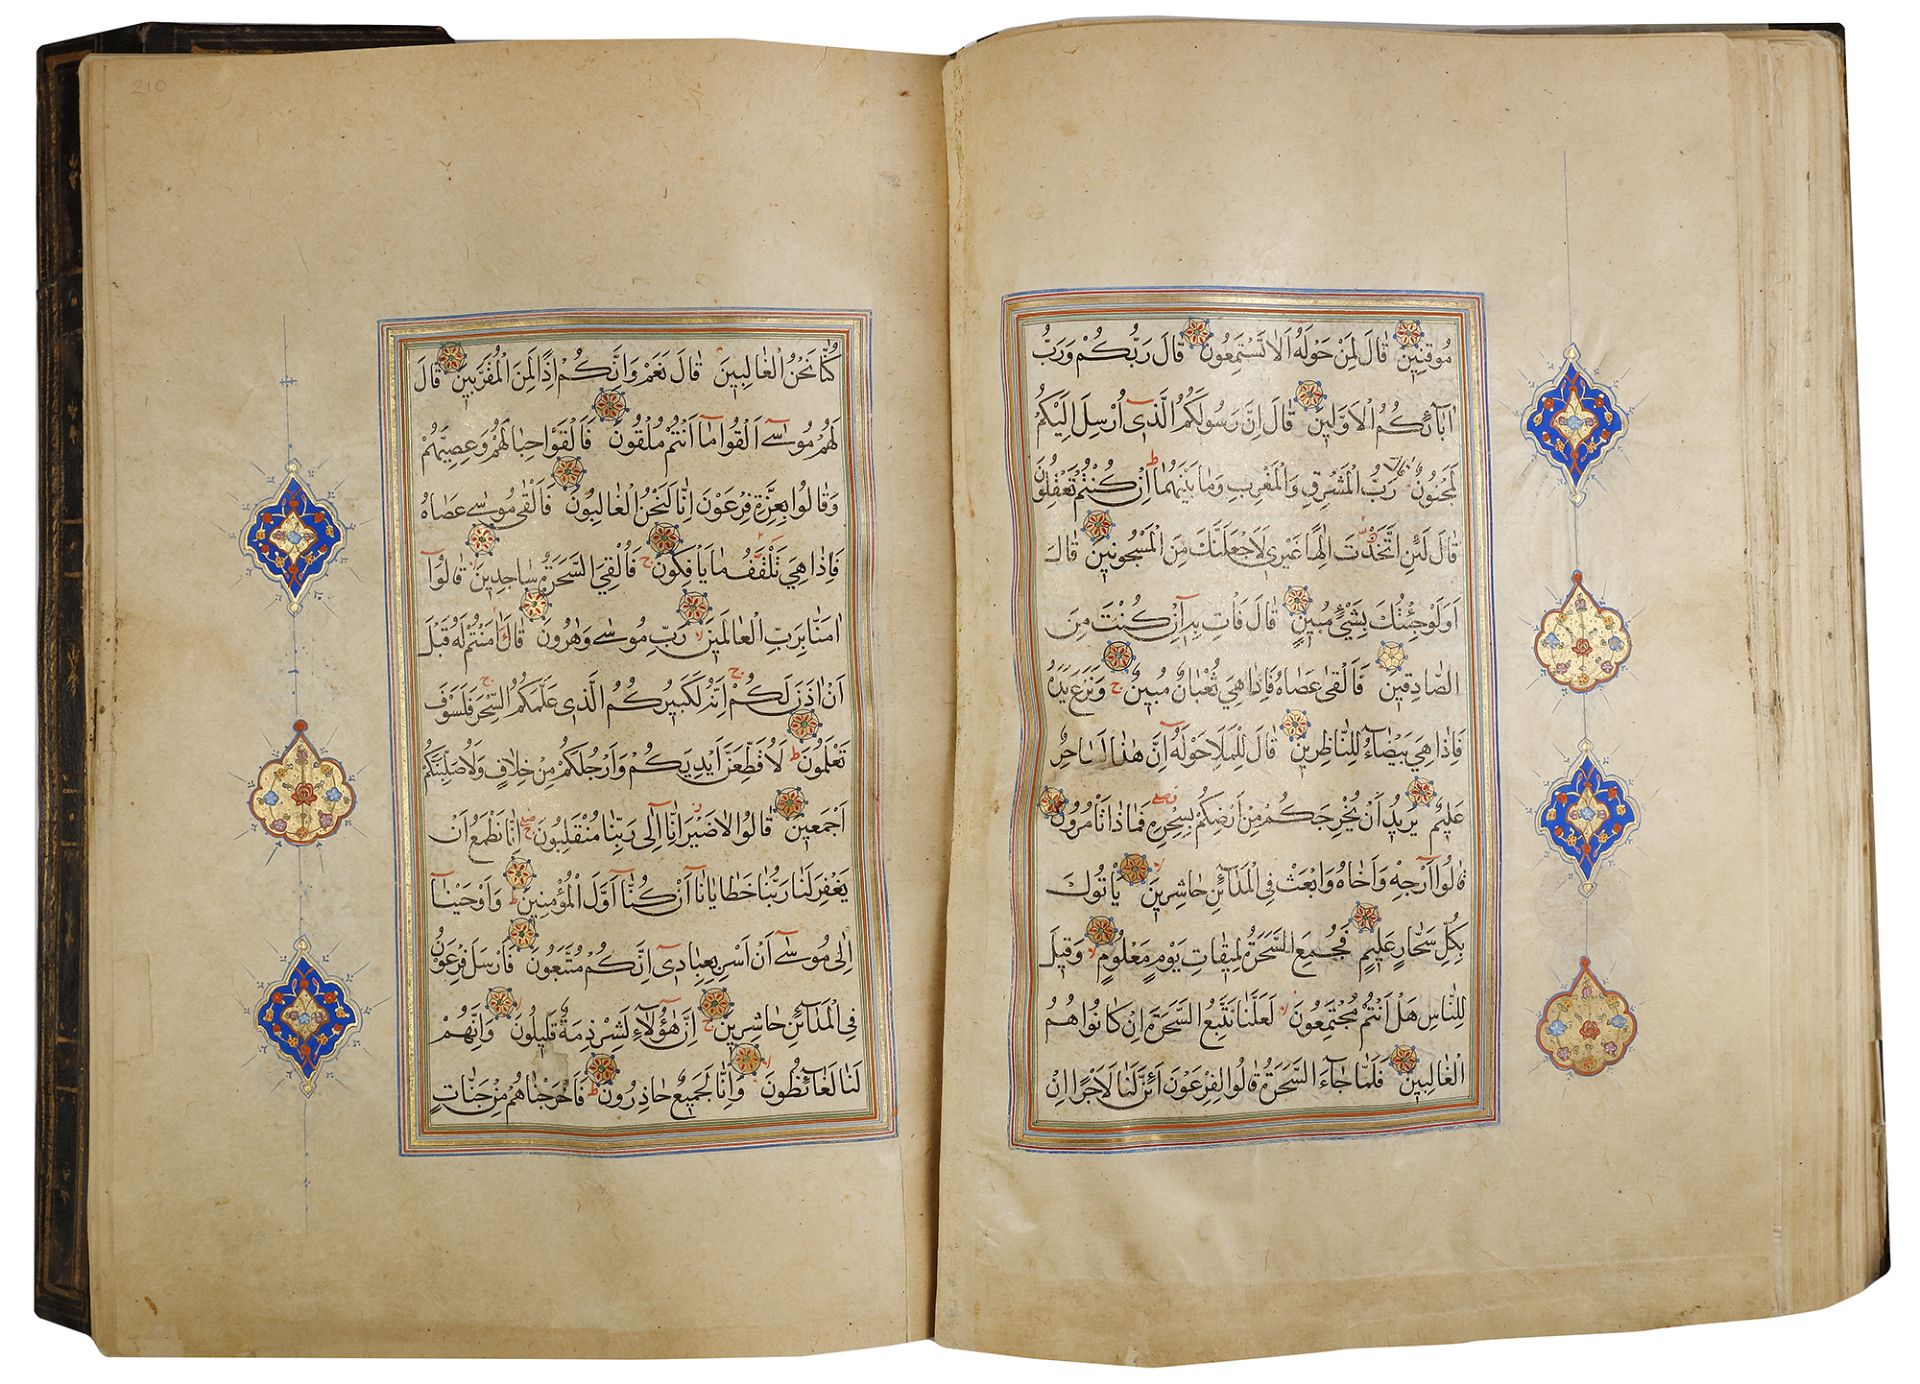 A LARGE ILLUMINATED QURAN, COPIED BY 'ALA'-AL-DIN MUHAMMAD AL-TABRIZI SAFAVID, PERSIA, 16TH CENT - Image 13 of 26